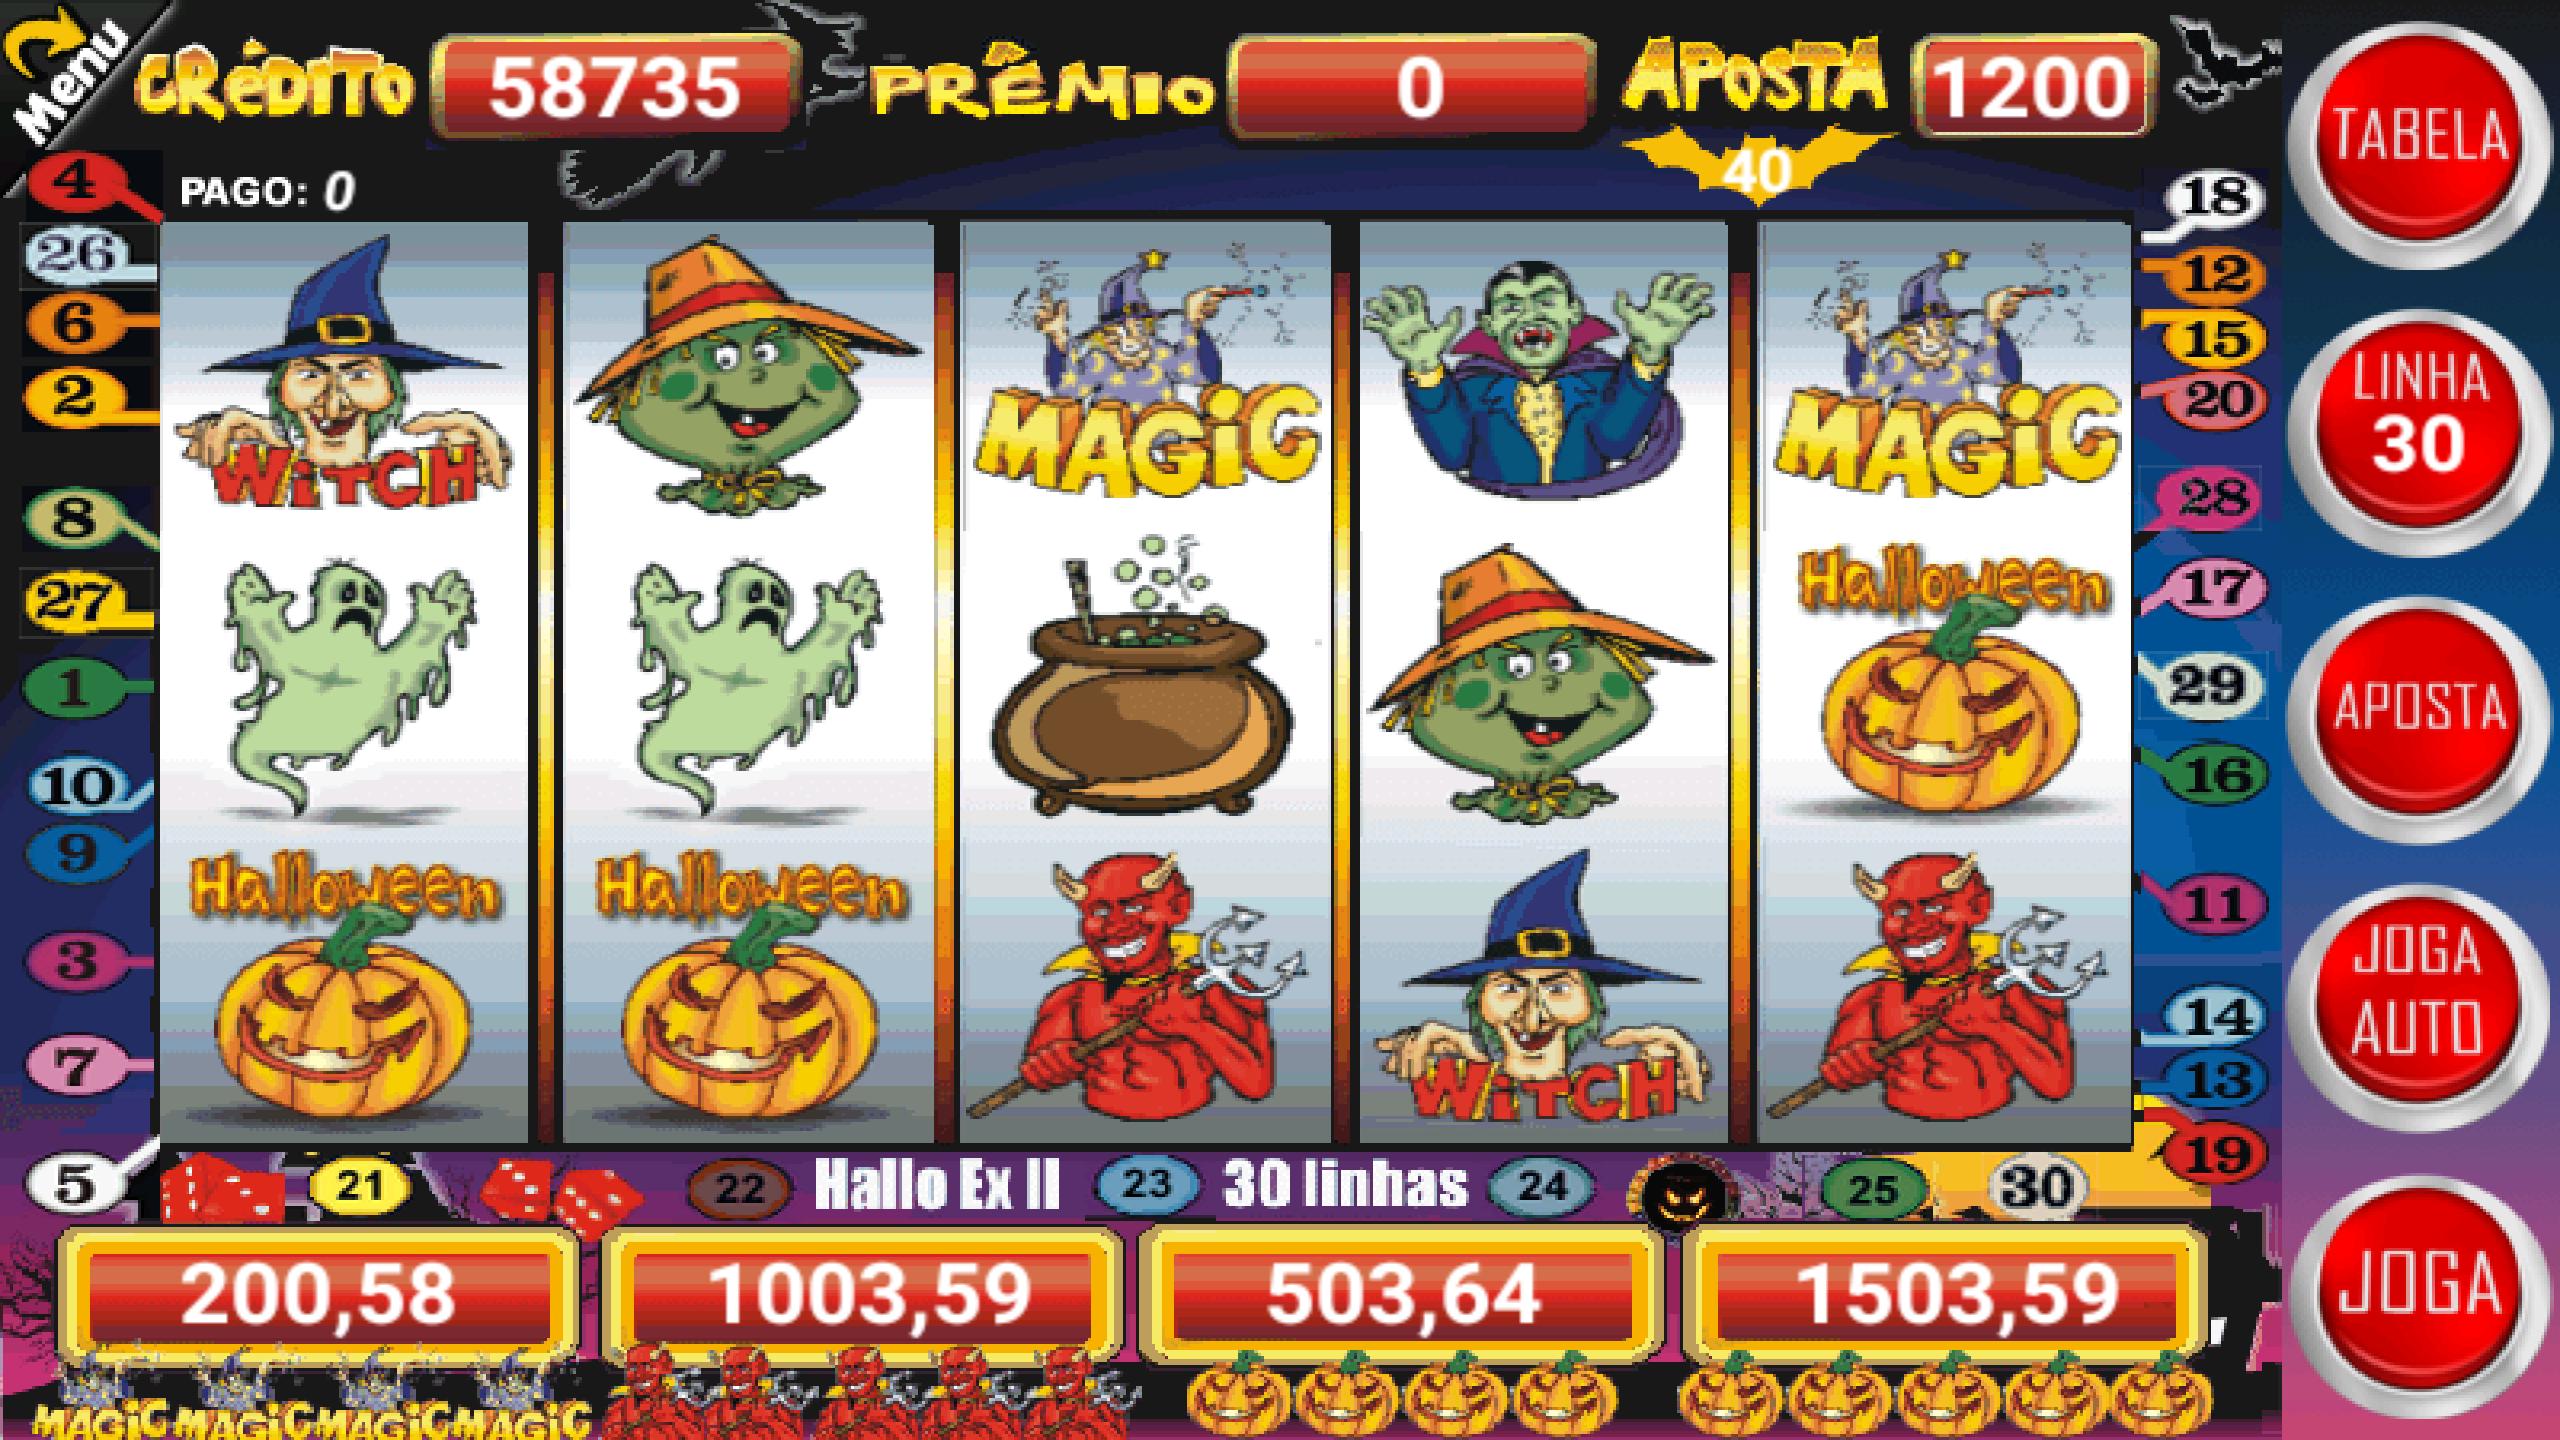 Mgm online casino